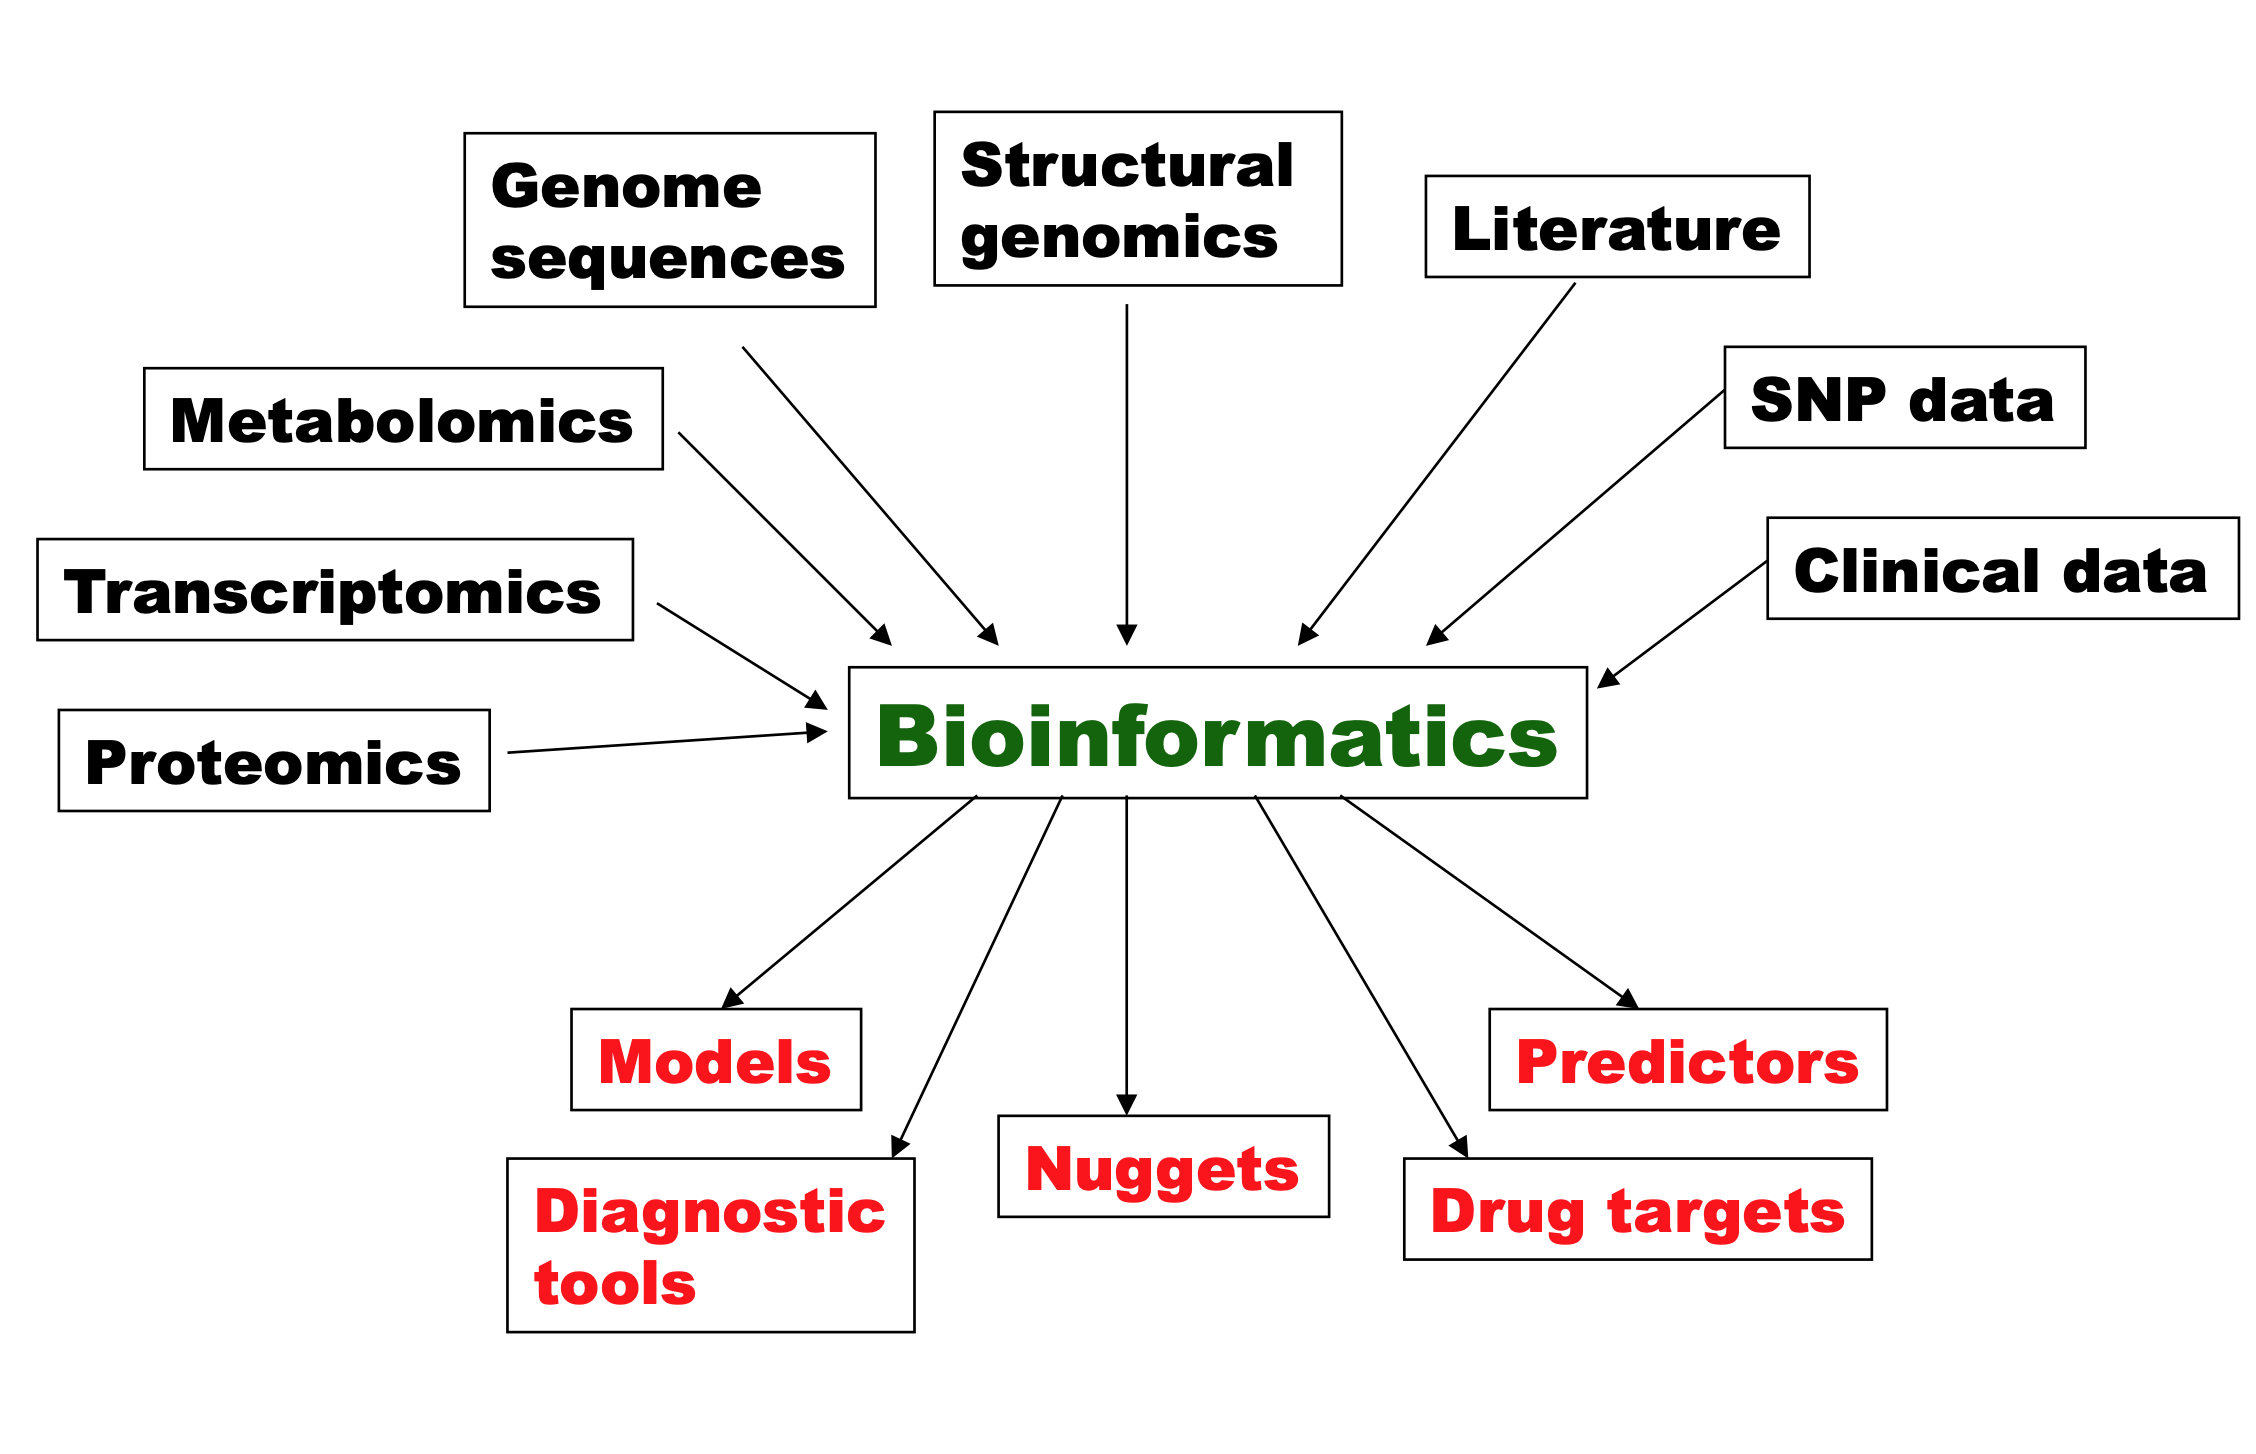 bioinformatics project topics list